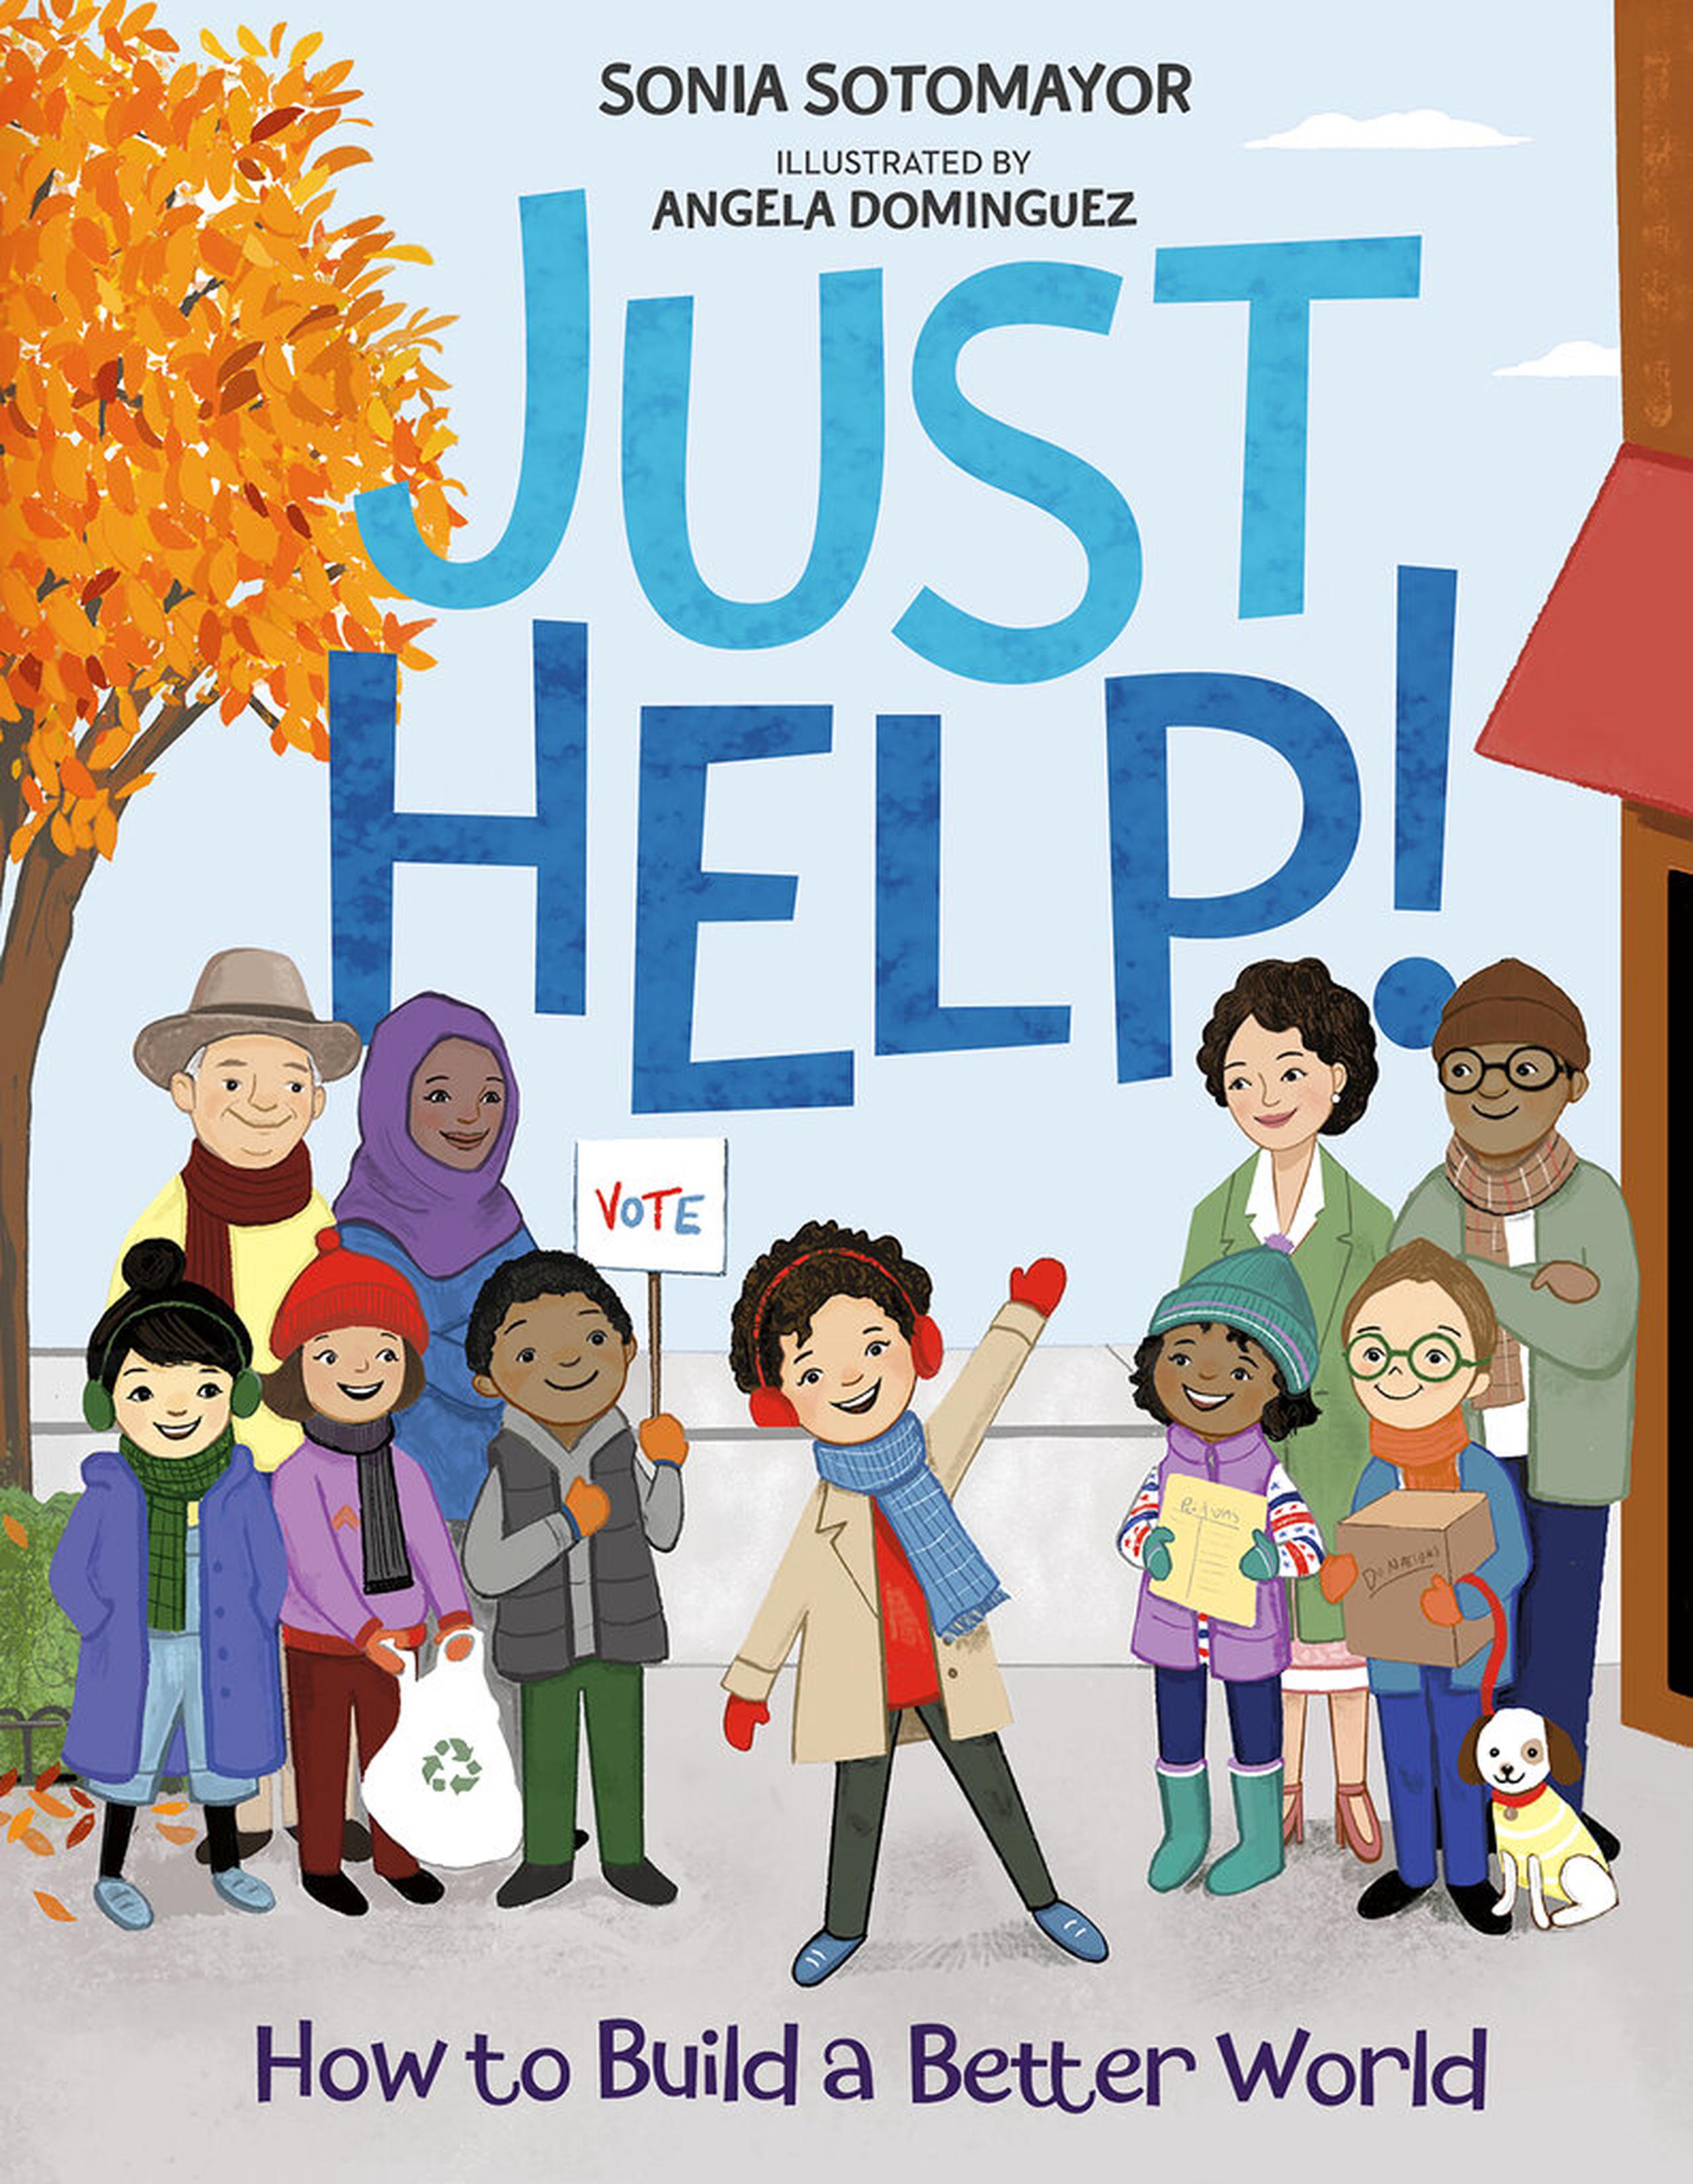 La carátula del libro “Just Help! How to Build a Better World”.